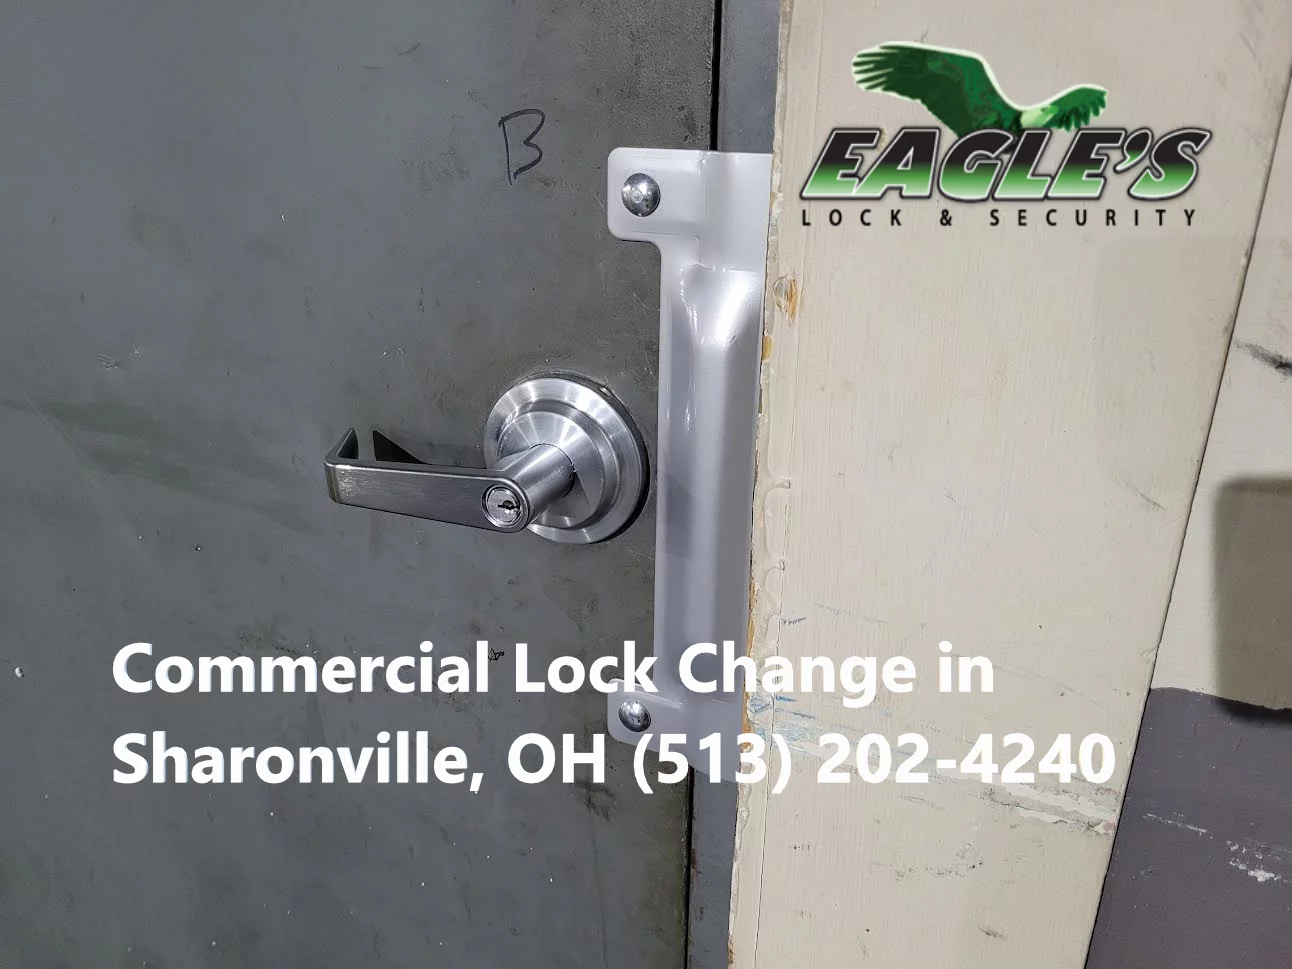 Commercial Lock Change in Sharonville, OH - Eagle's Locksmith Cincinnati